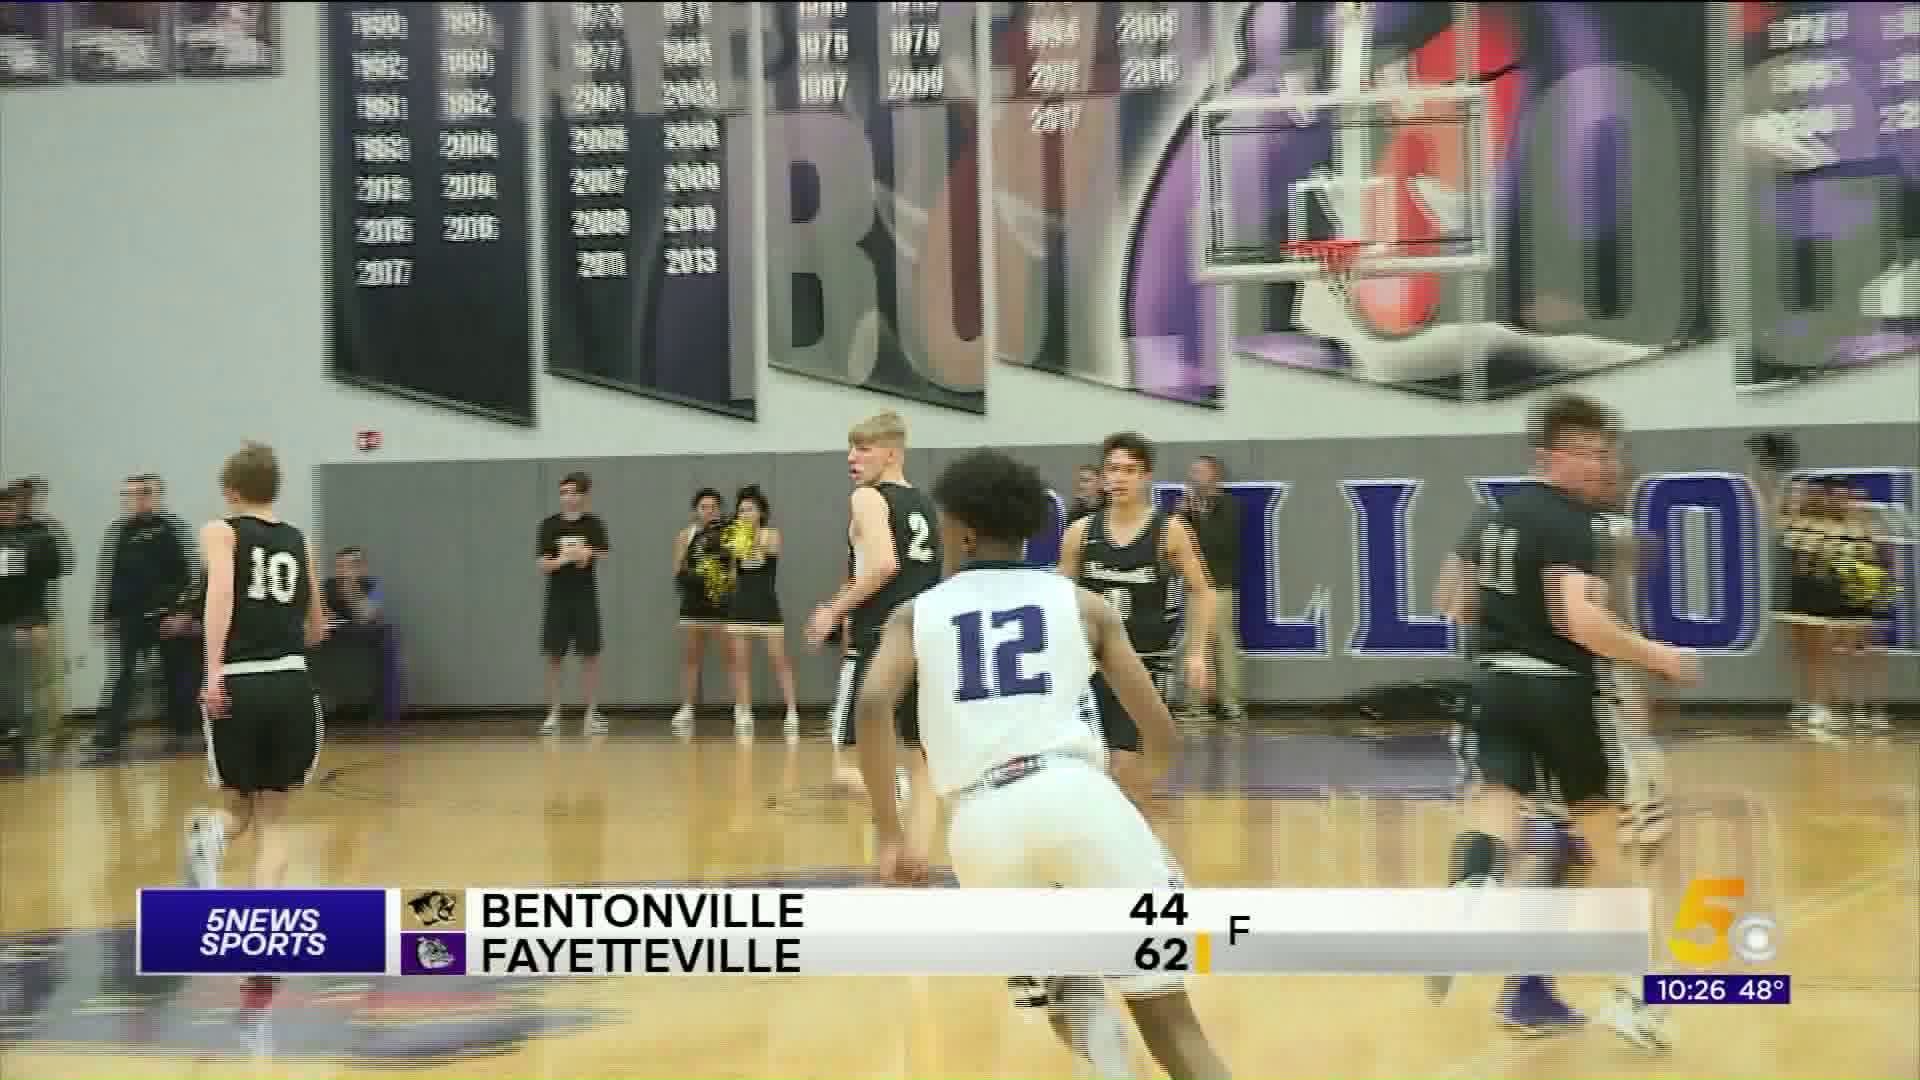 Bentonville at Fayetteville boys